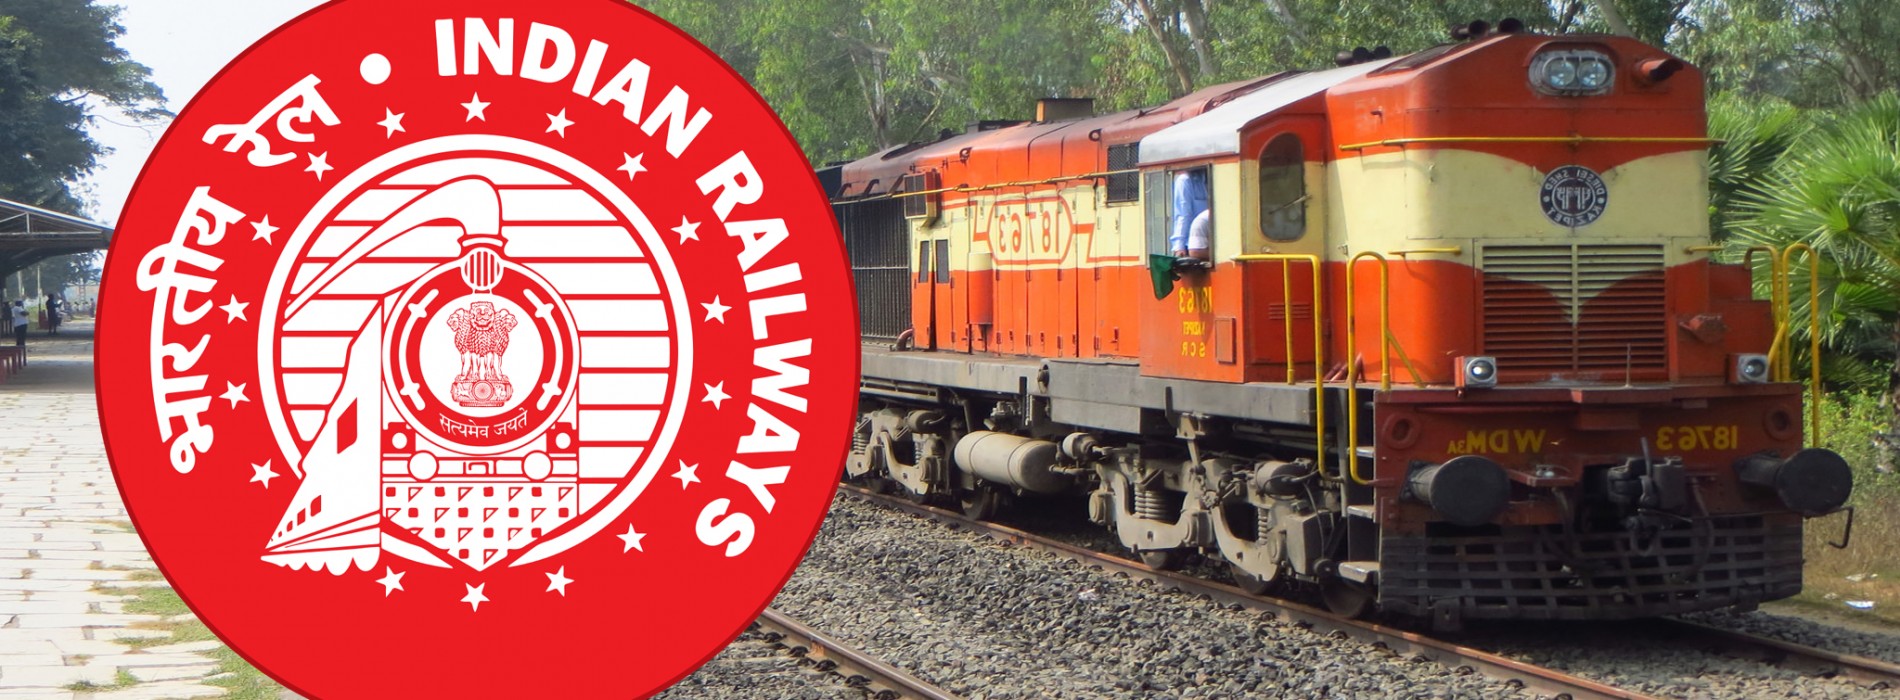 Indian Railways to offer veg-only menu on Gandhi Jayanti